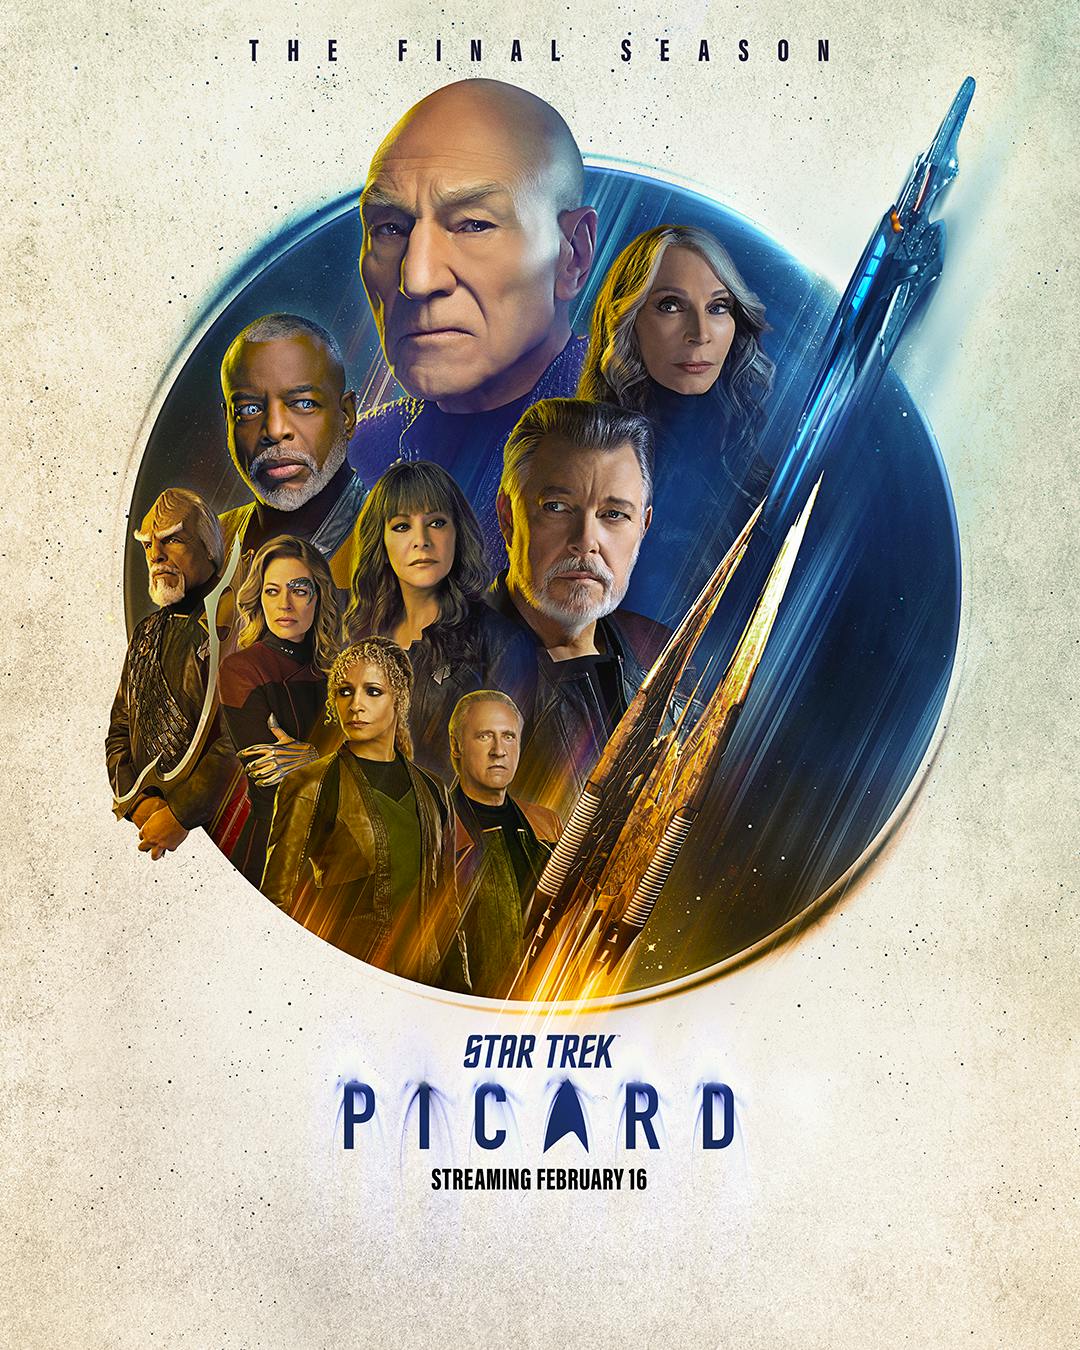 Star Trek: Picard Season 3 teaser art poster featuring Picard, Worf, Dr. Crusher, Riker, La Forge, Deanna Troi, Seven of Nine, Raffi, and Brent Spiner